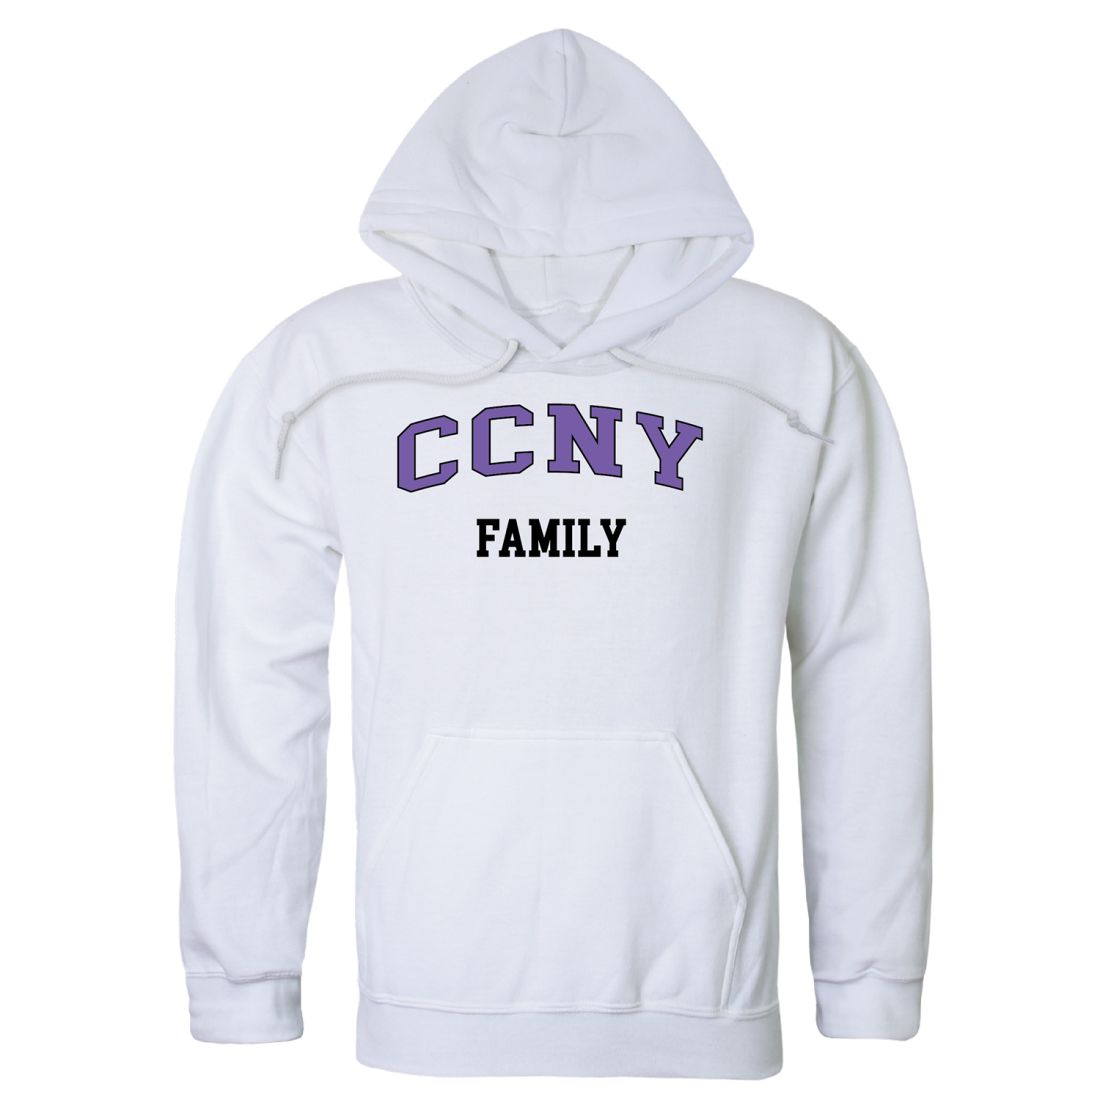 City College of New York Beavers Family Hoodie Sweatshirts